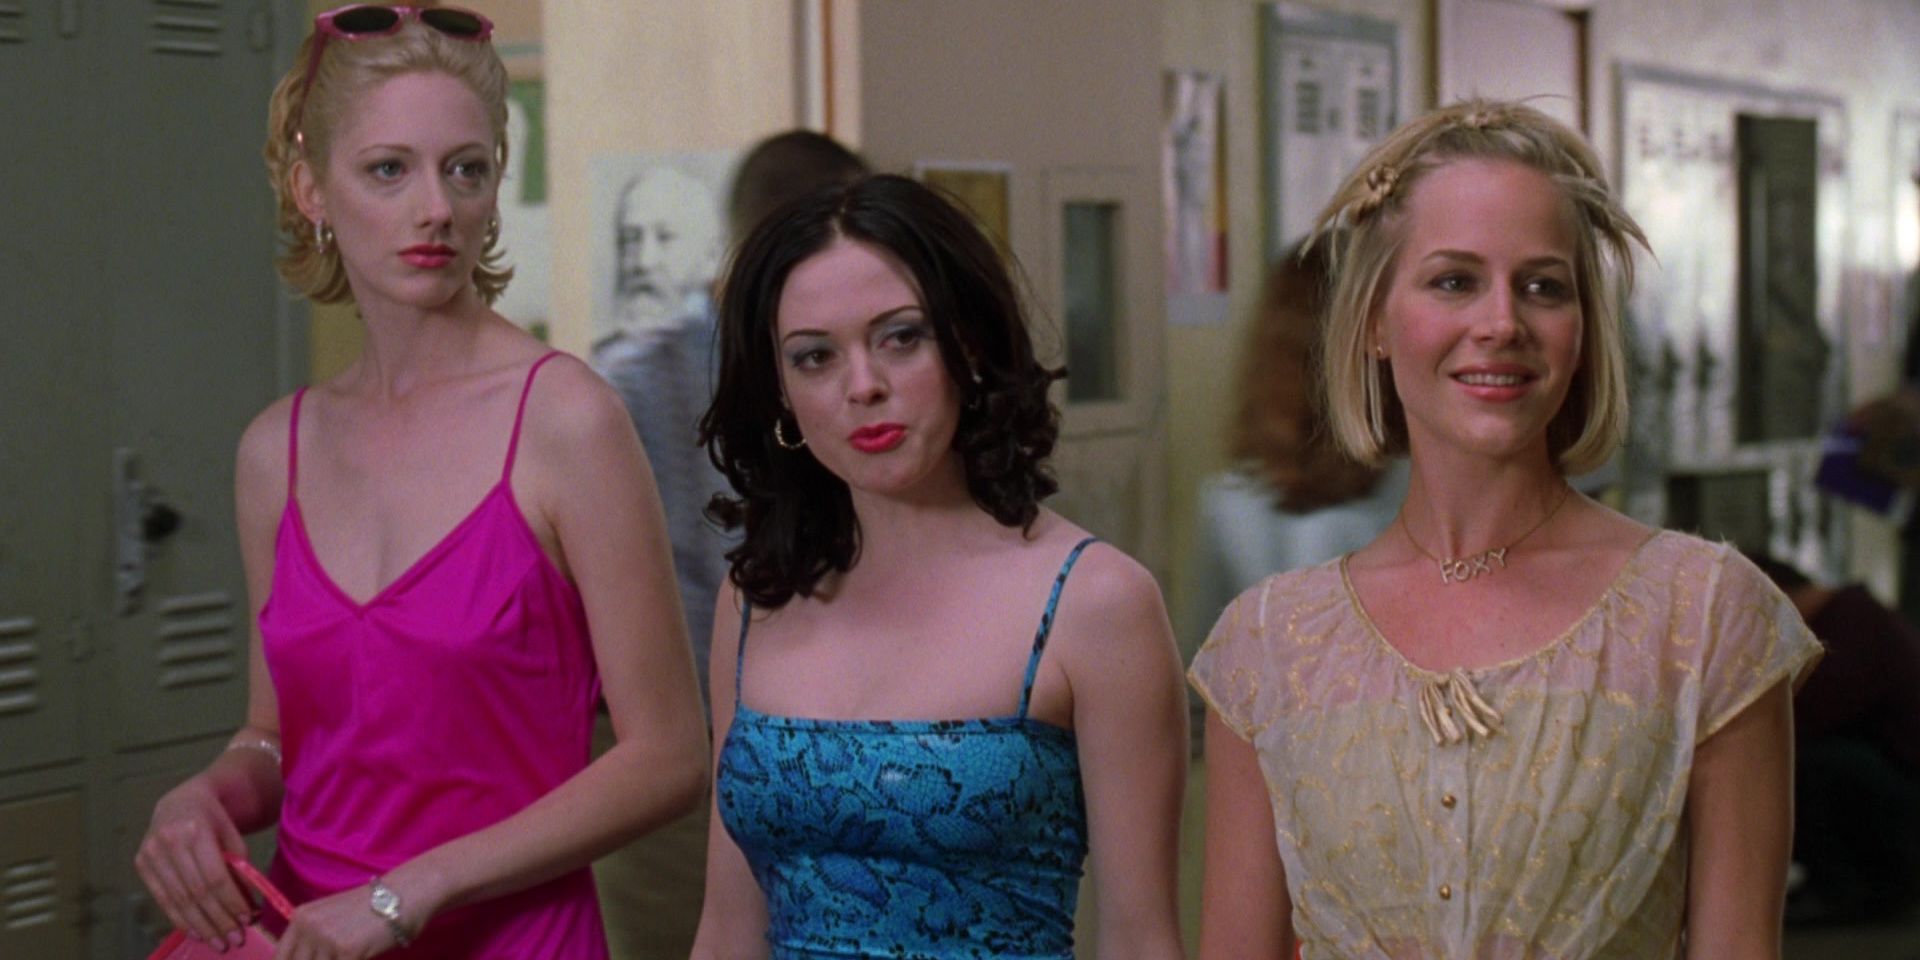 The girls stand in the hallway in Jawbreaker.